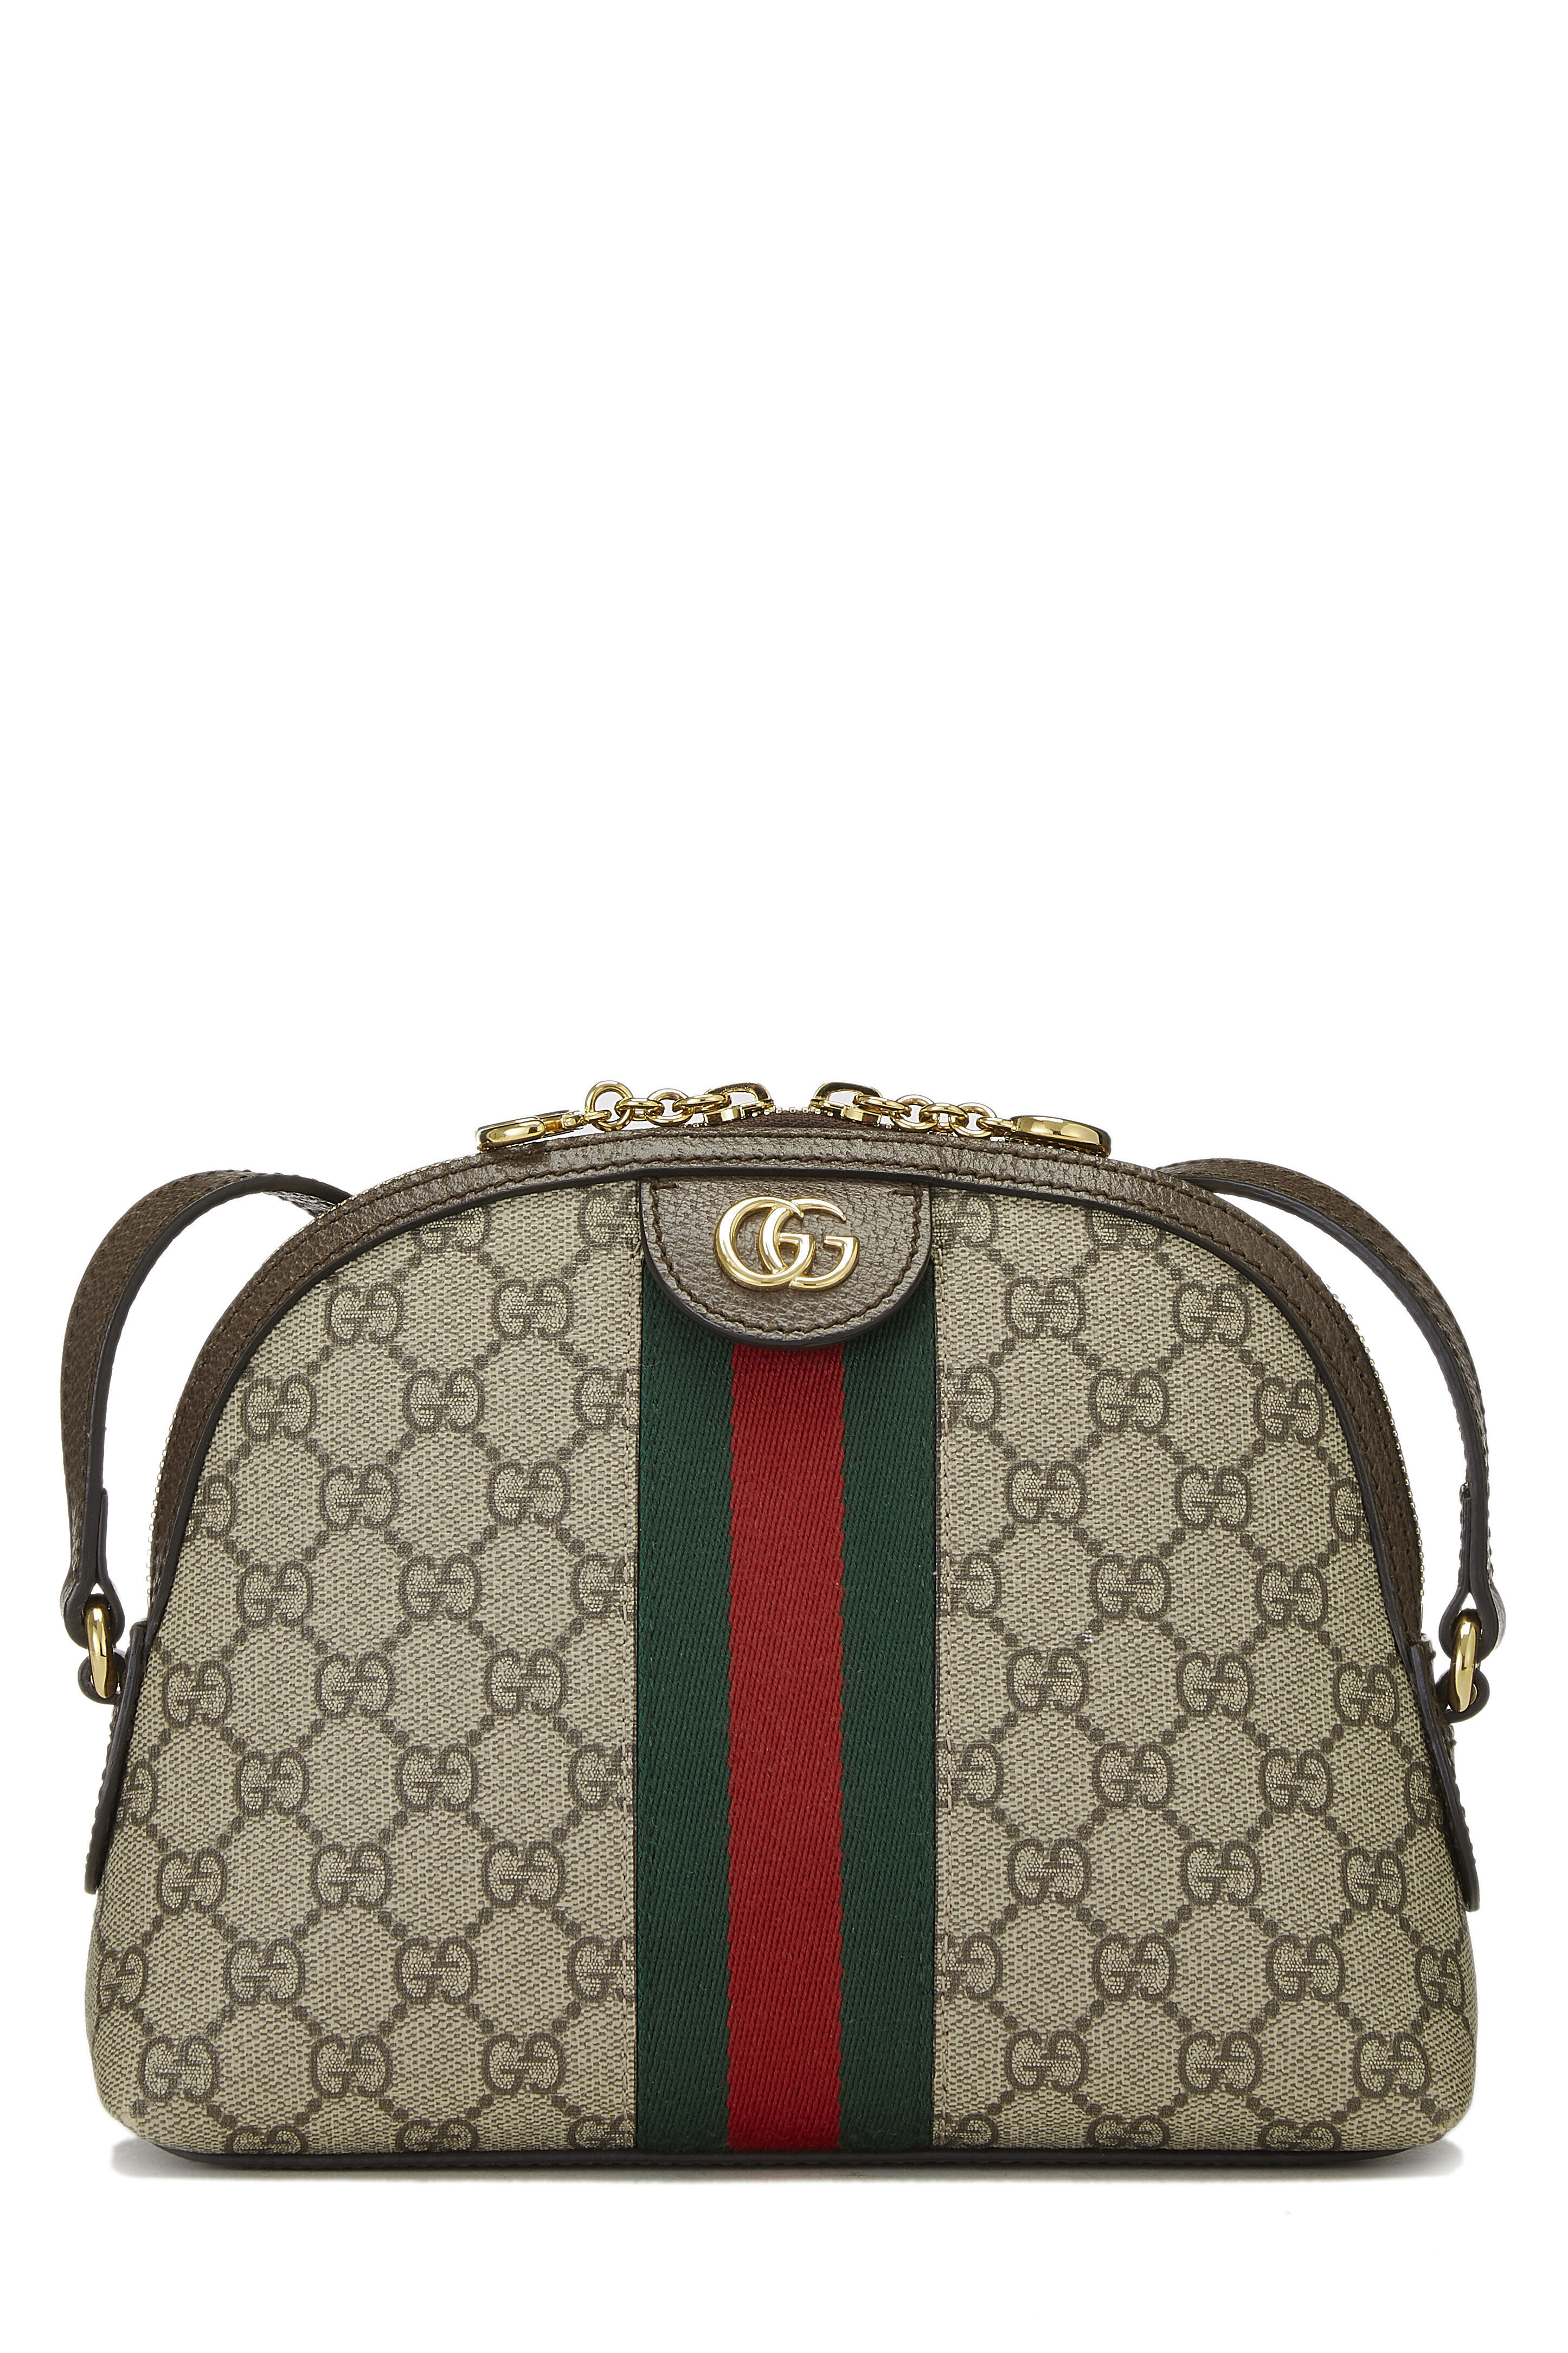 Gucci Gucci Handbags Zumi | Chairish